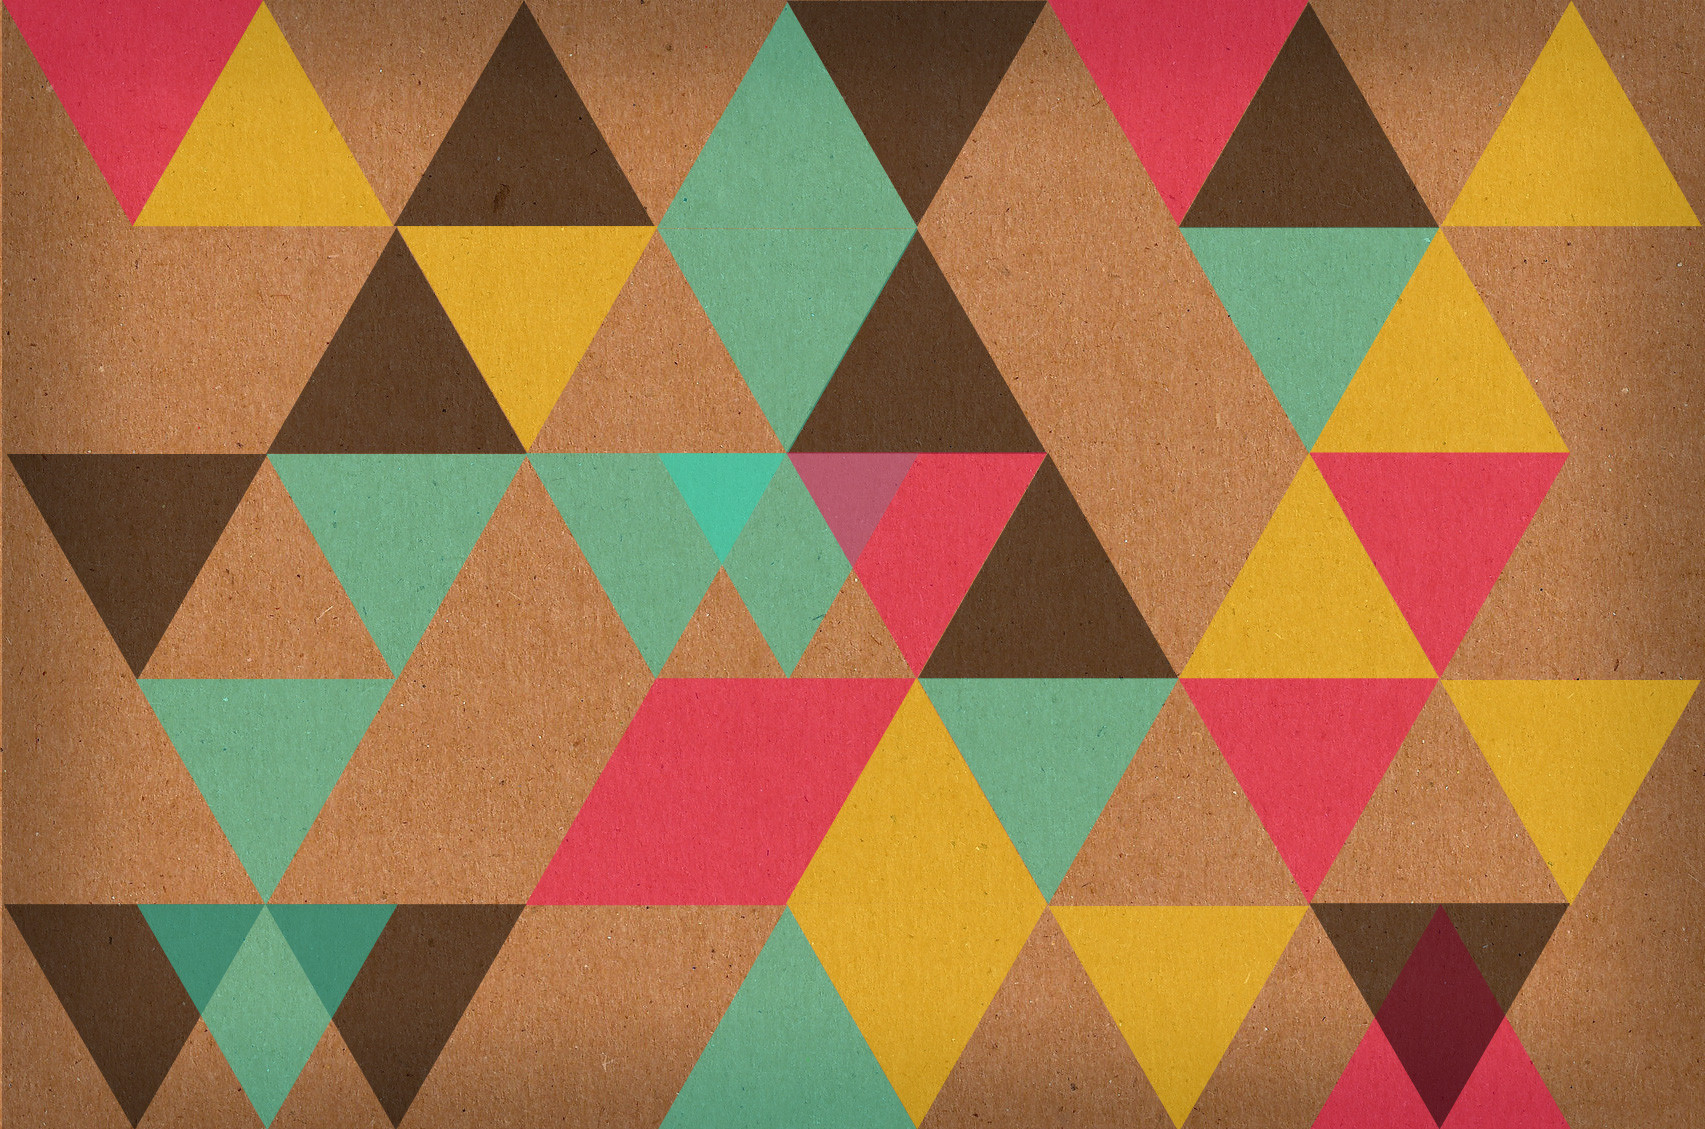 board wallpaper,orange,pattern,triangle,brown,yellow